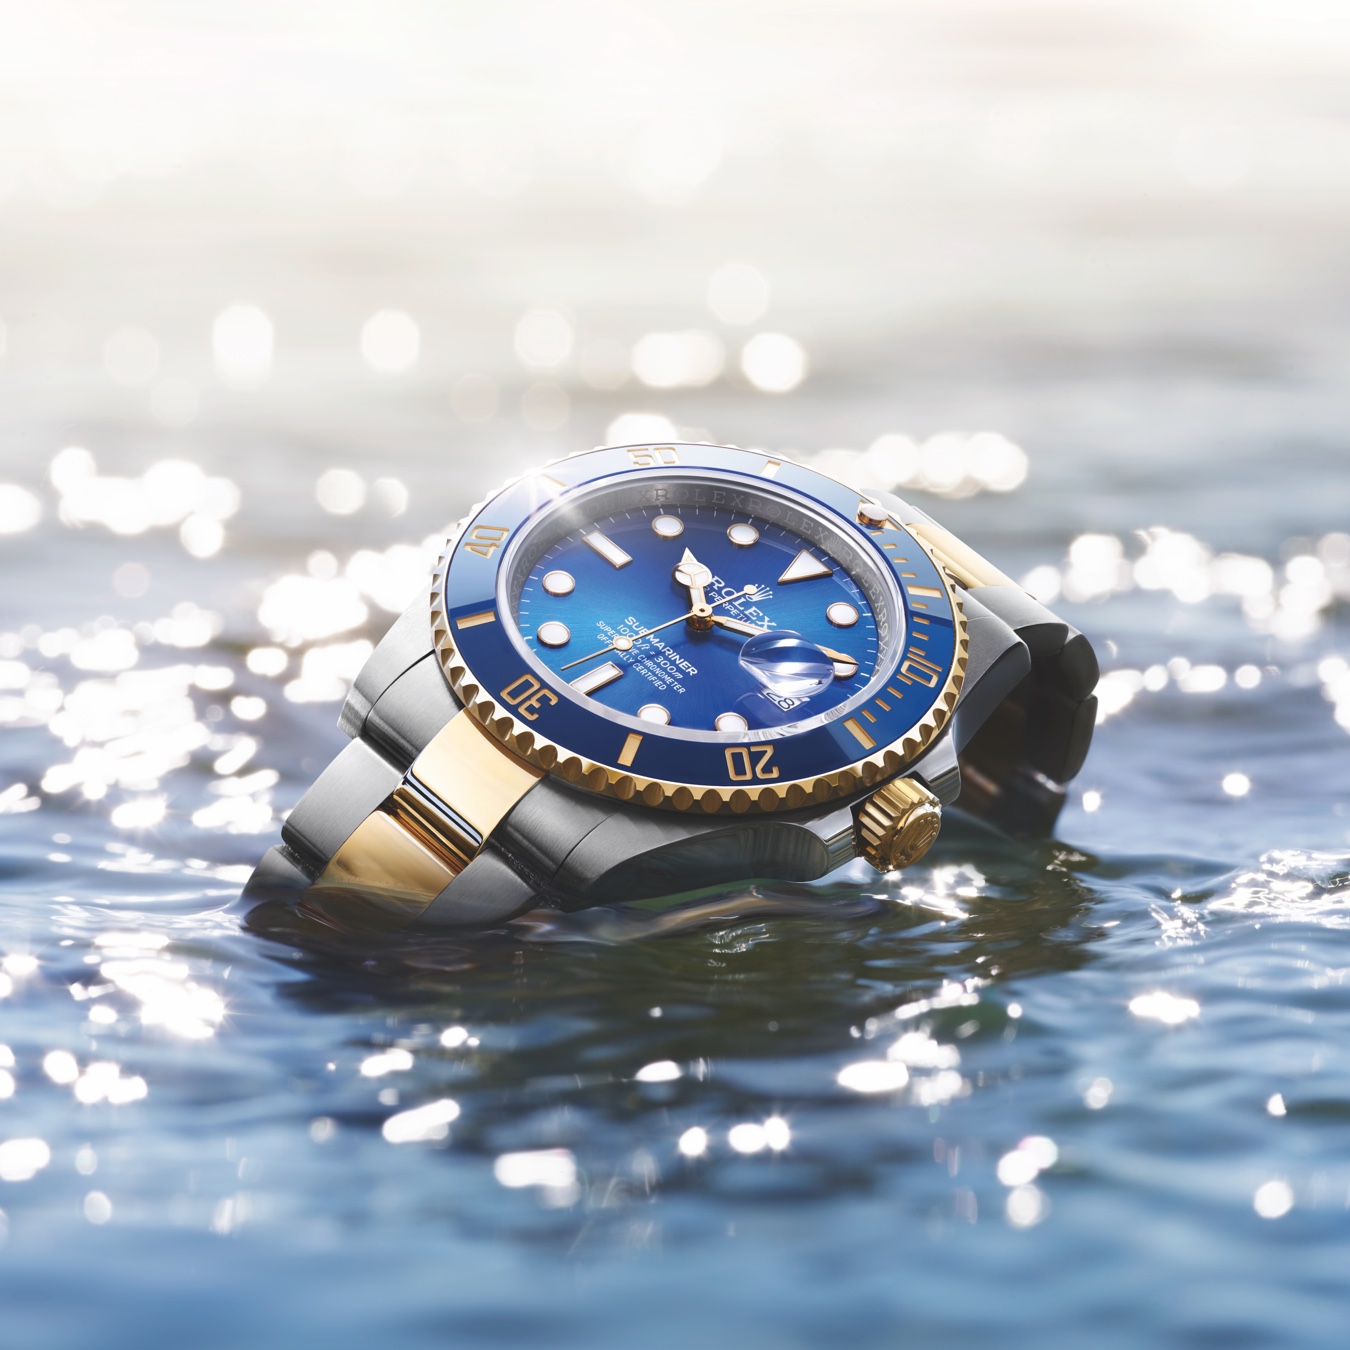 Rolex Oyster Perpetual Submariner reloj de buceo